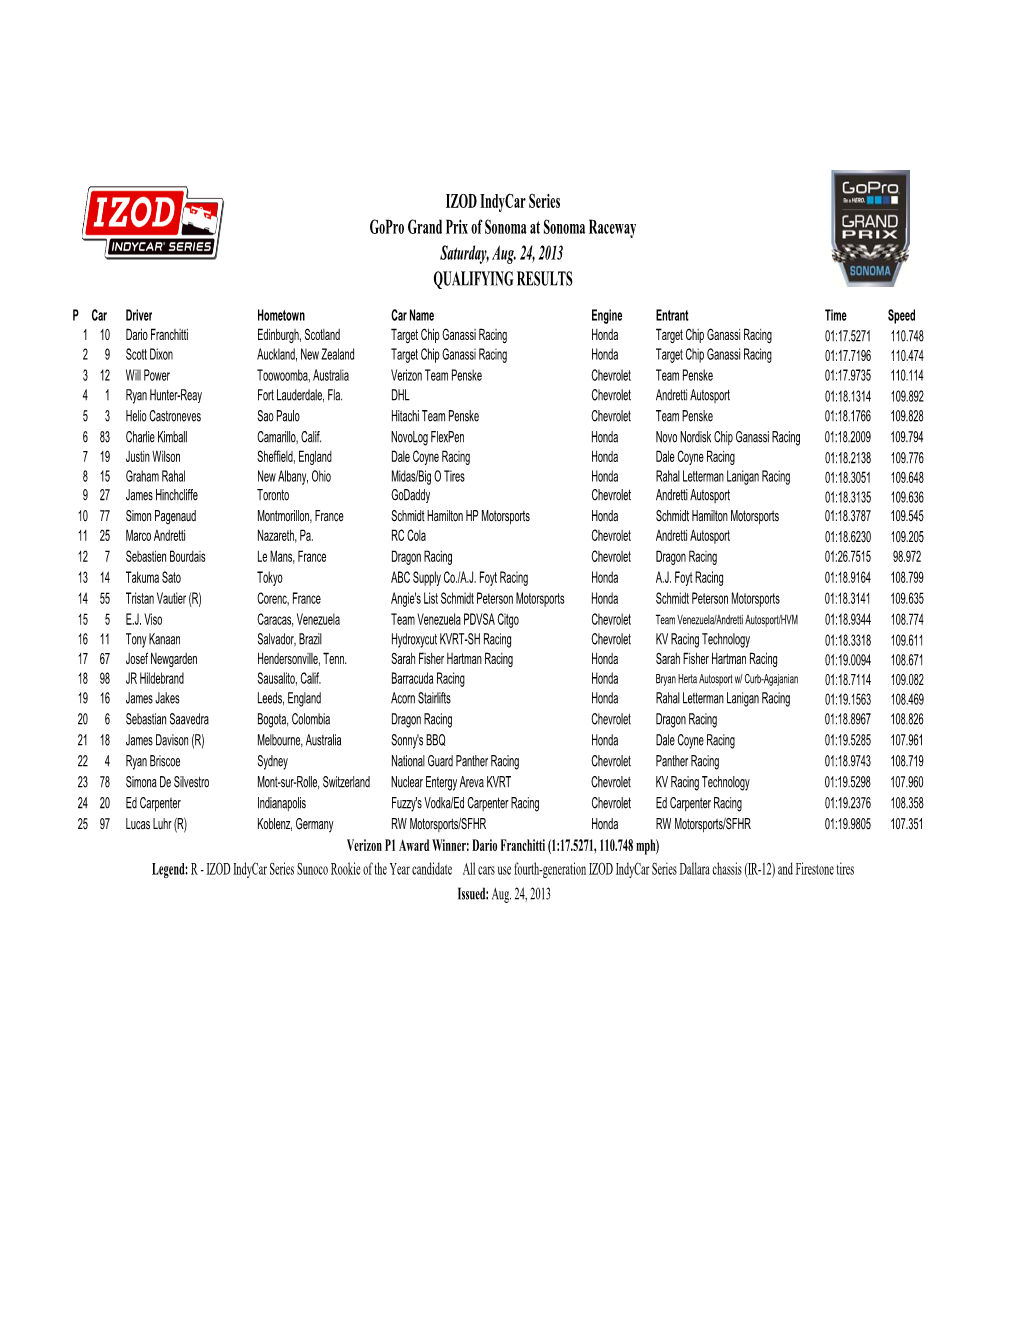 Gopro Grand Prix of Sonoma Qual Results